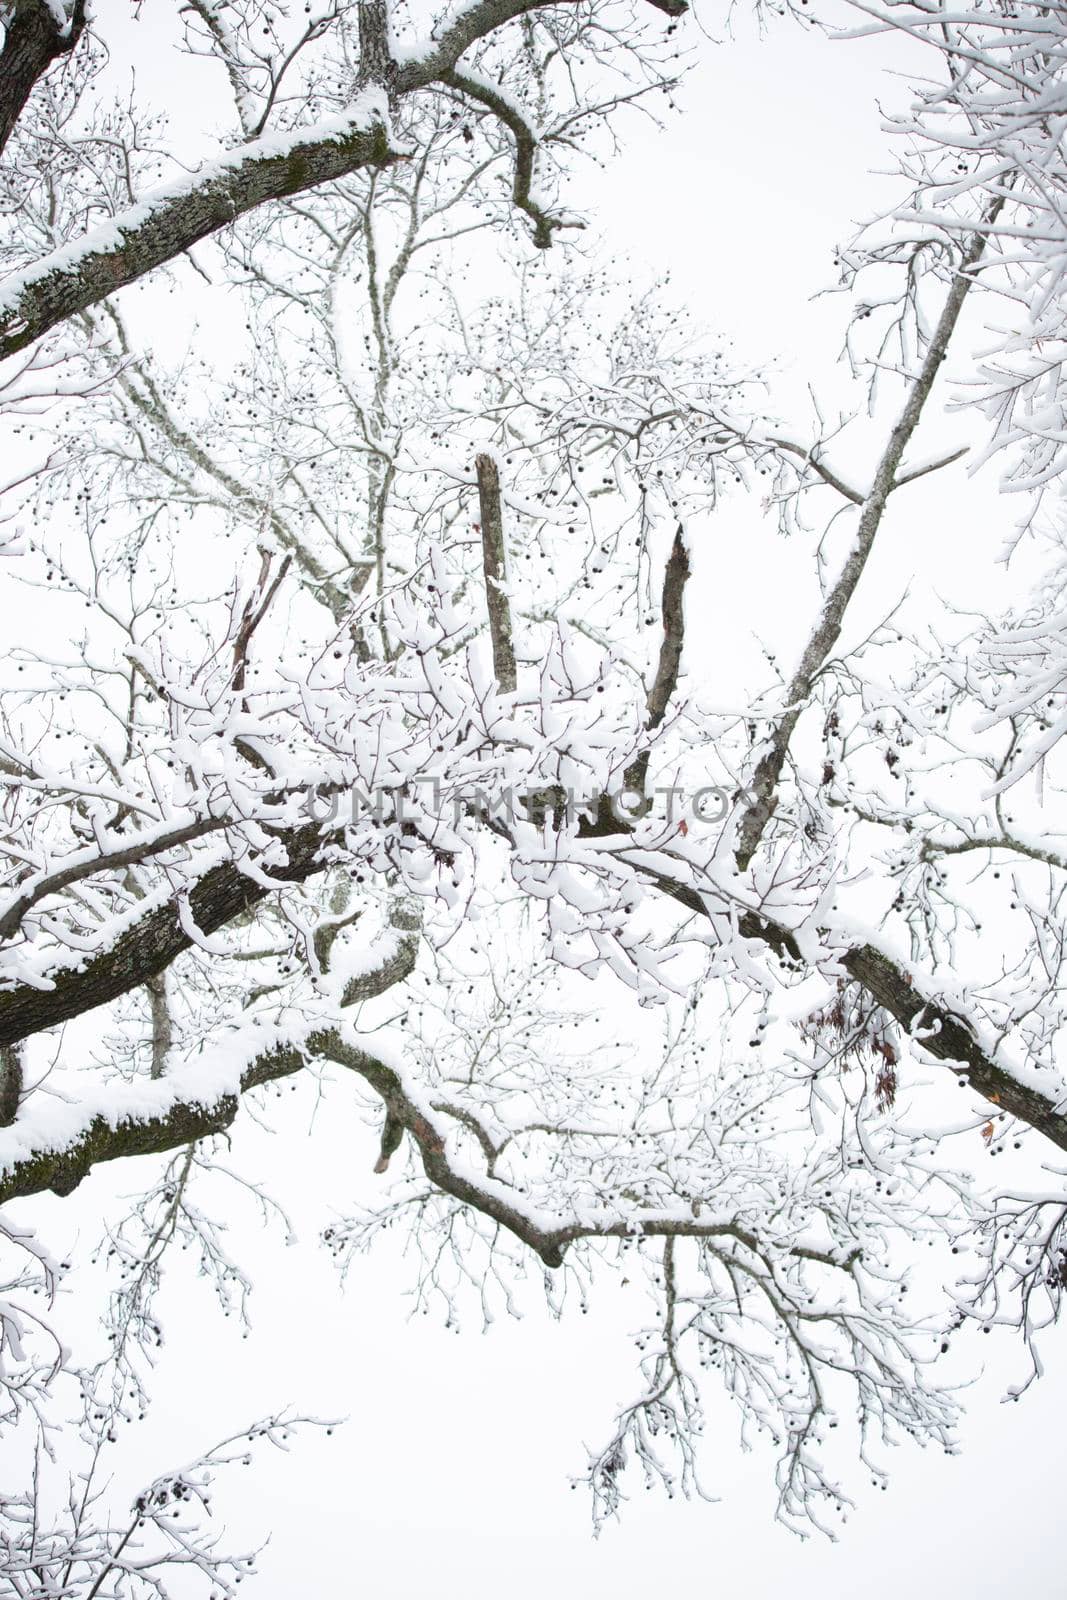 Snow-Covered Tree Limbs by tornado98